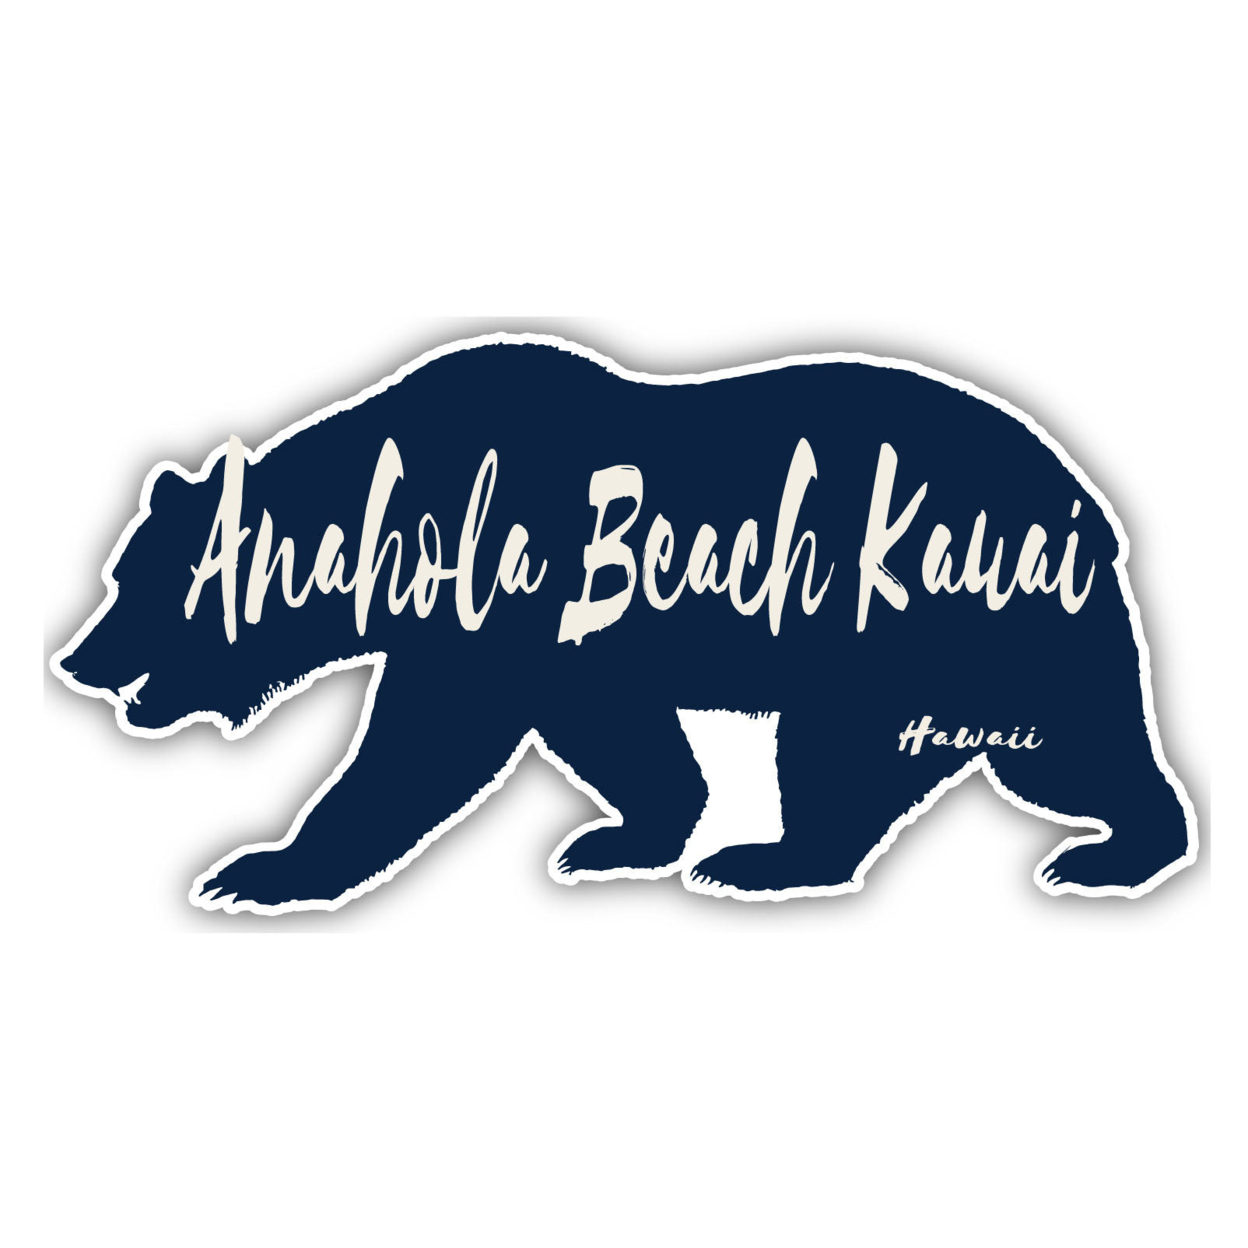 Anahola Beach Kauai Hawaii Souvenir Decorative Stickers (Choose Theme And Size) - 4-Pack, 10-Inch, Bear